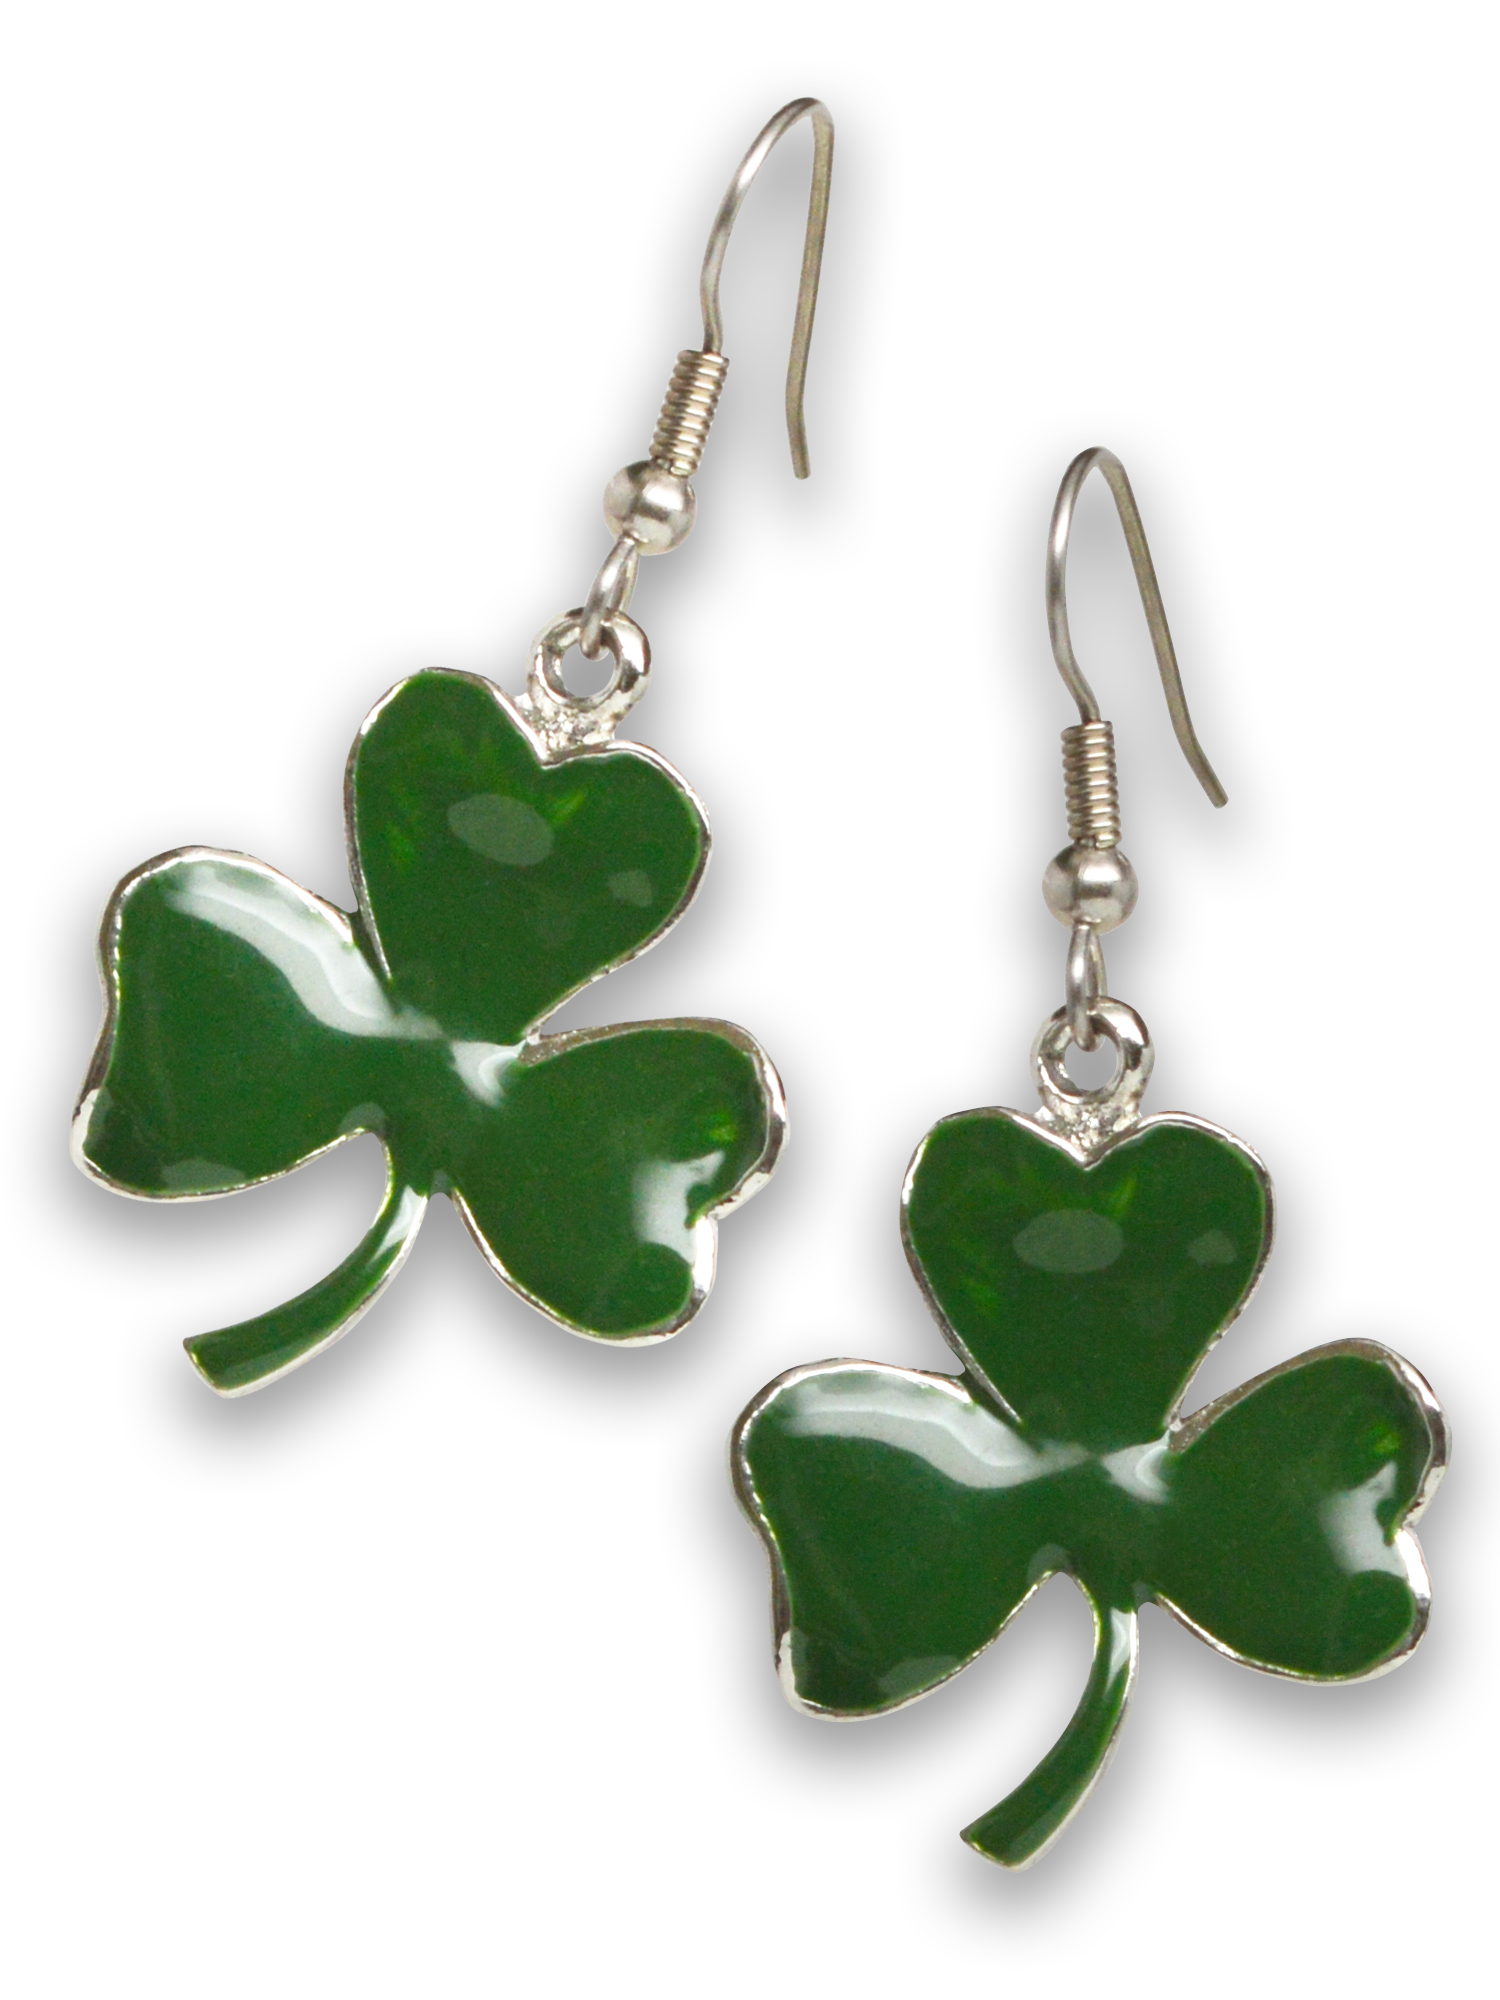 St. Patrick's Day Irish Shamrock Dangle Earrings Green Enamel Silver Finish Pewter Real Metal #1037 - image 1 of 6